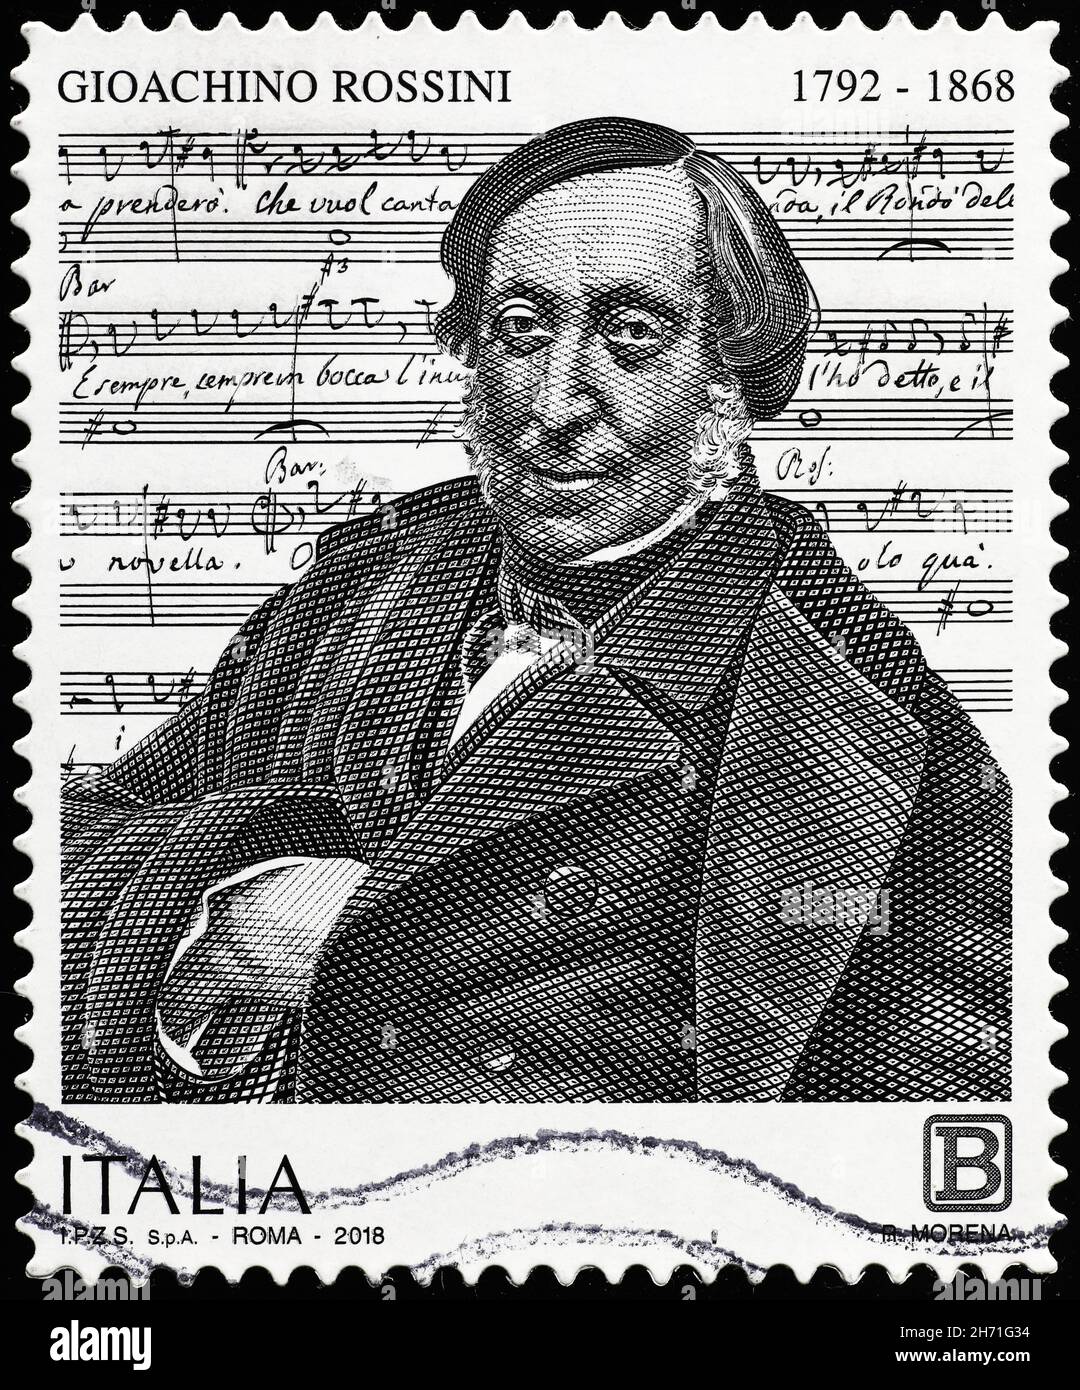 Gioacchino Rossini sur timbre-poste italien Banque D'Images